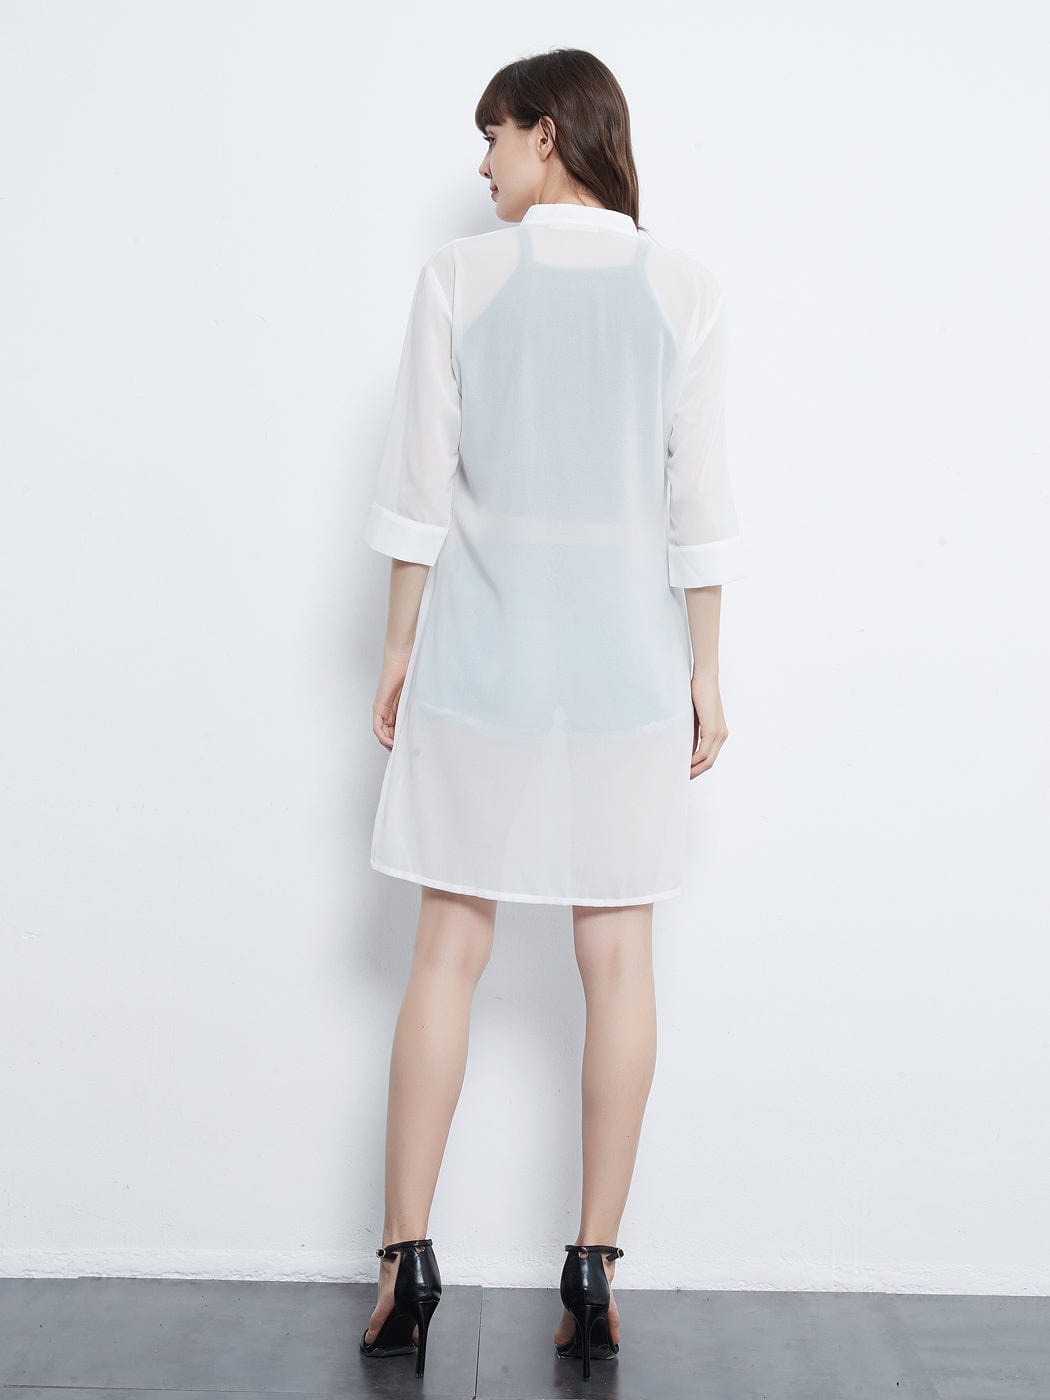 sheer-blouse-rules  Sheer clothing, Sheer white blouse, Chiffon dress